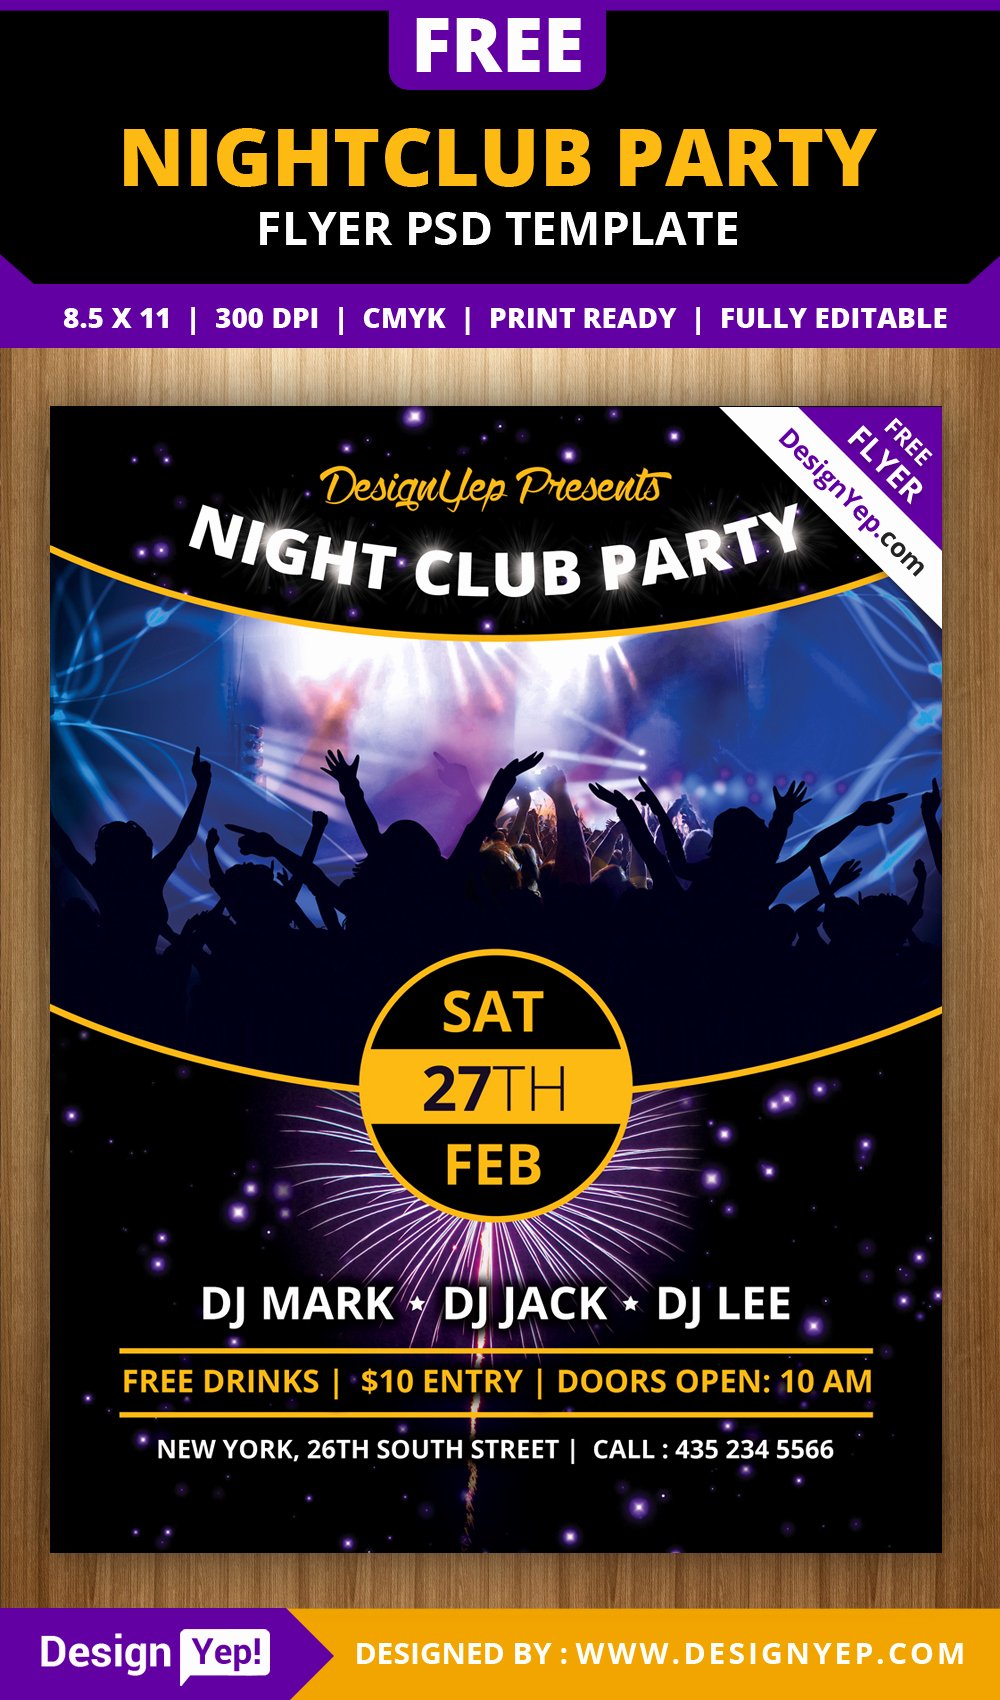 Free Party Flyer Templates Elegant Free Nightclub Party Flyer Psd Template Designyep